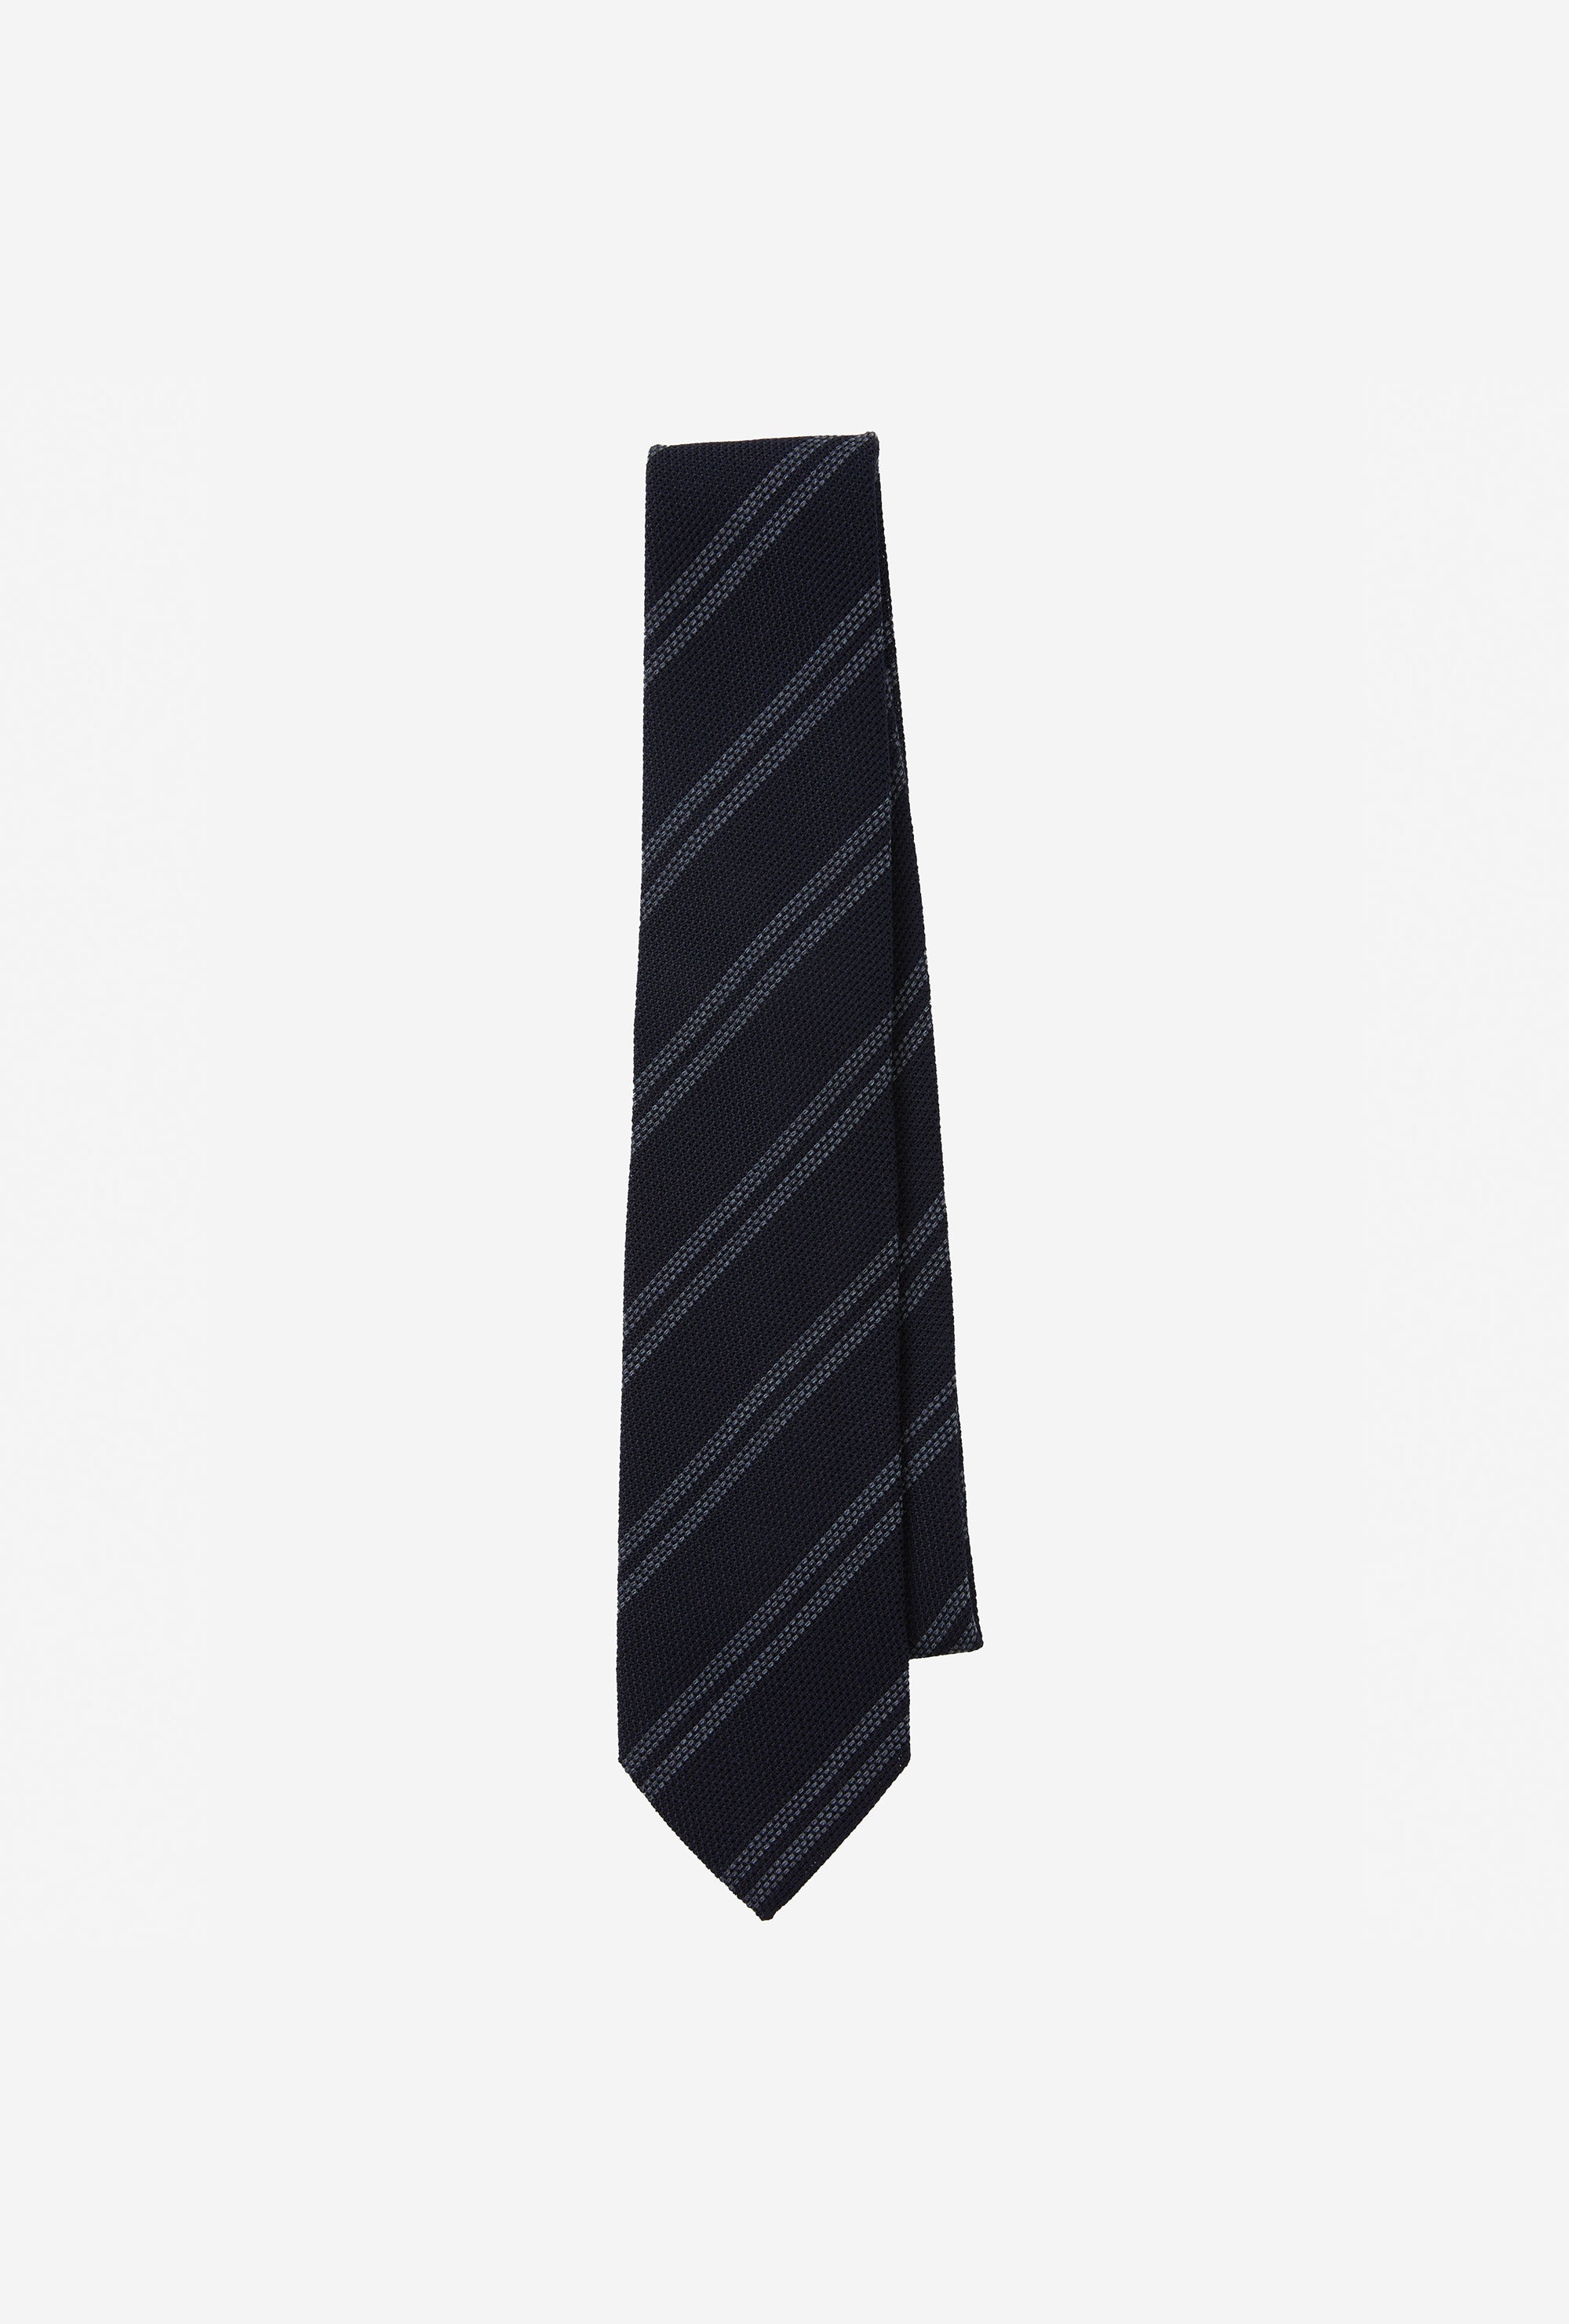 Tie Grenadine Navy Grey Double Stripe